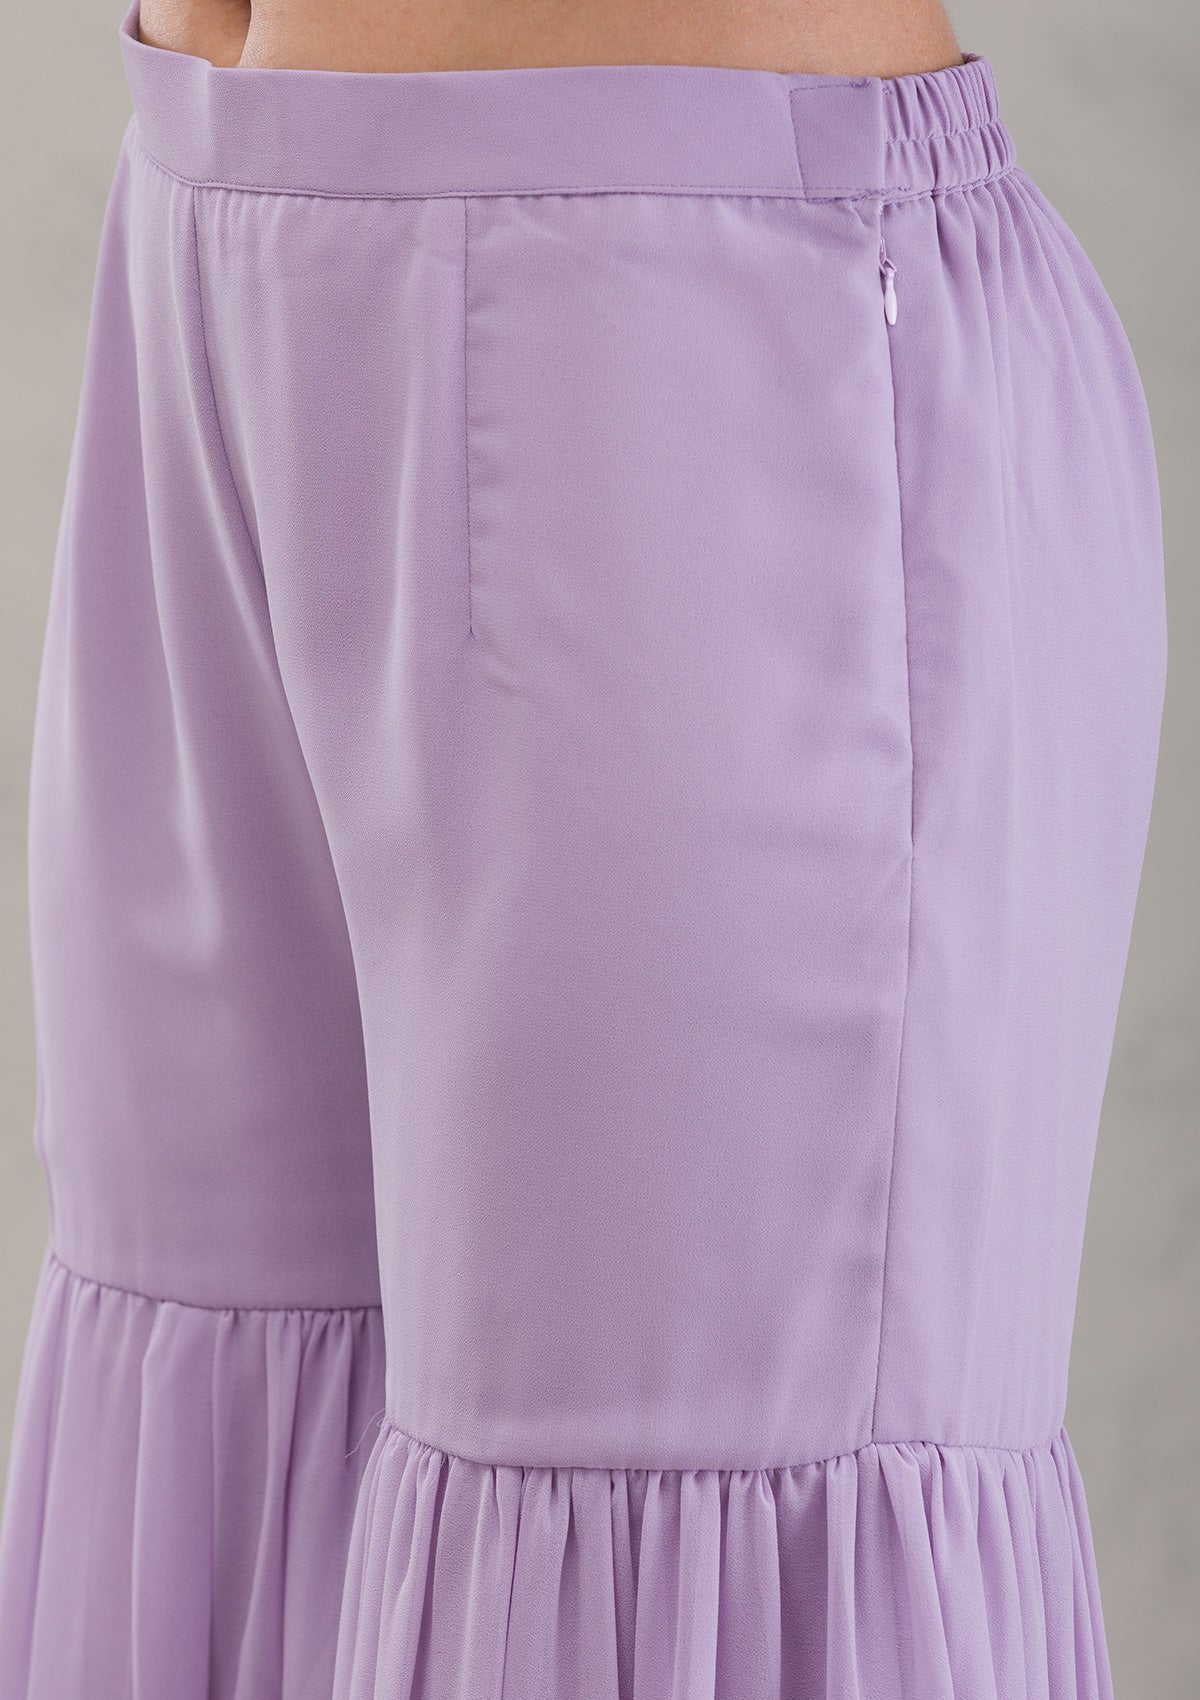 Lavender Sequins Georgette Readymade Salwar Suit